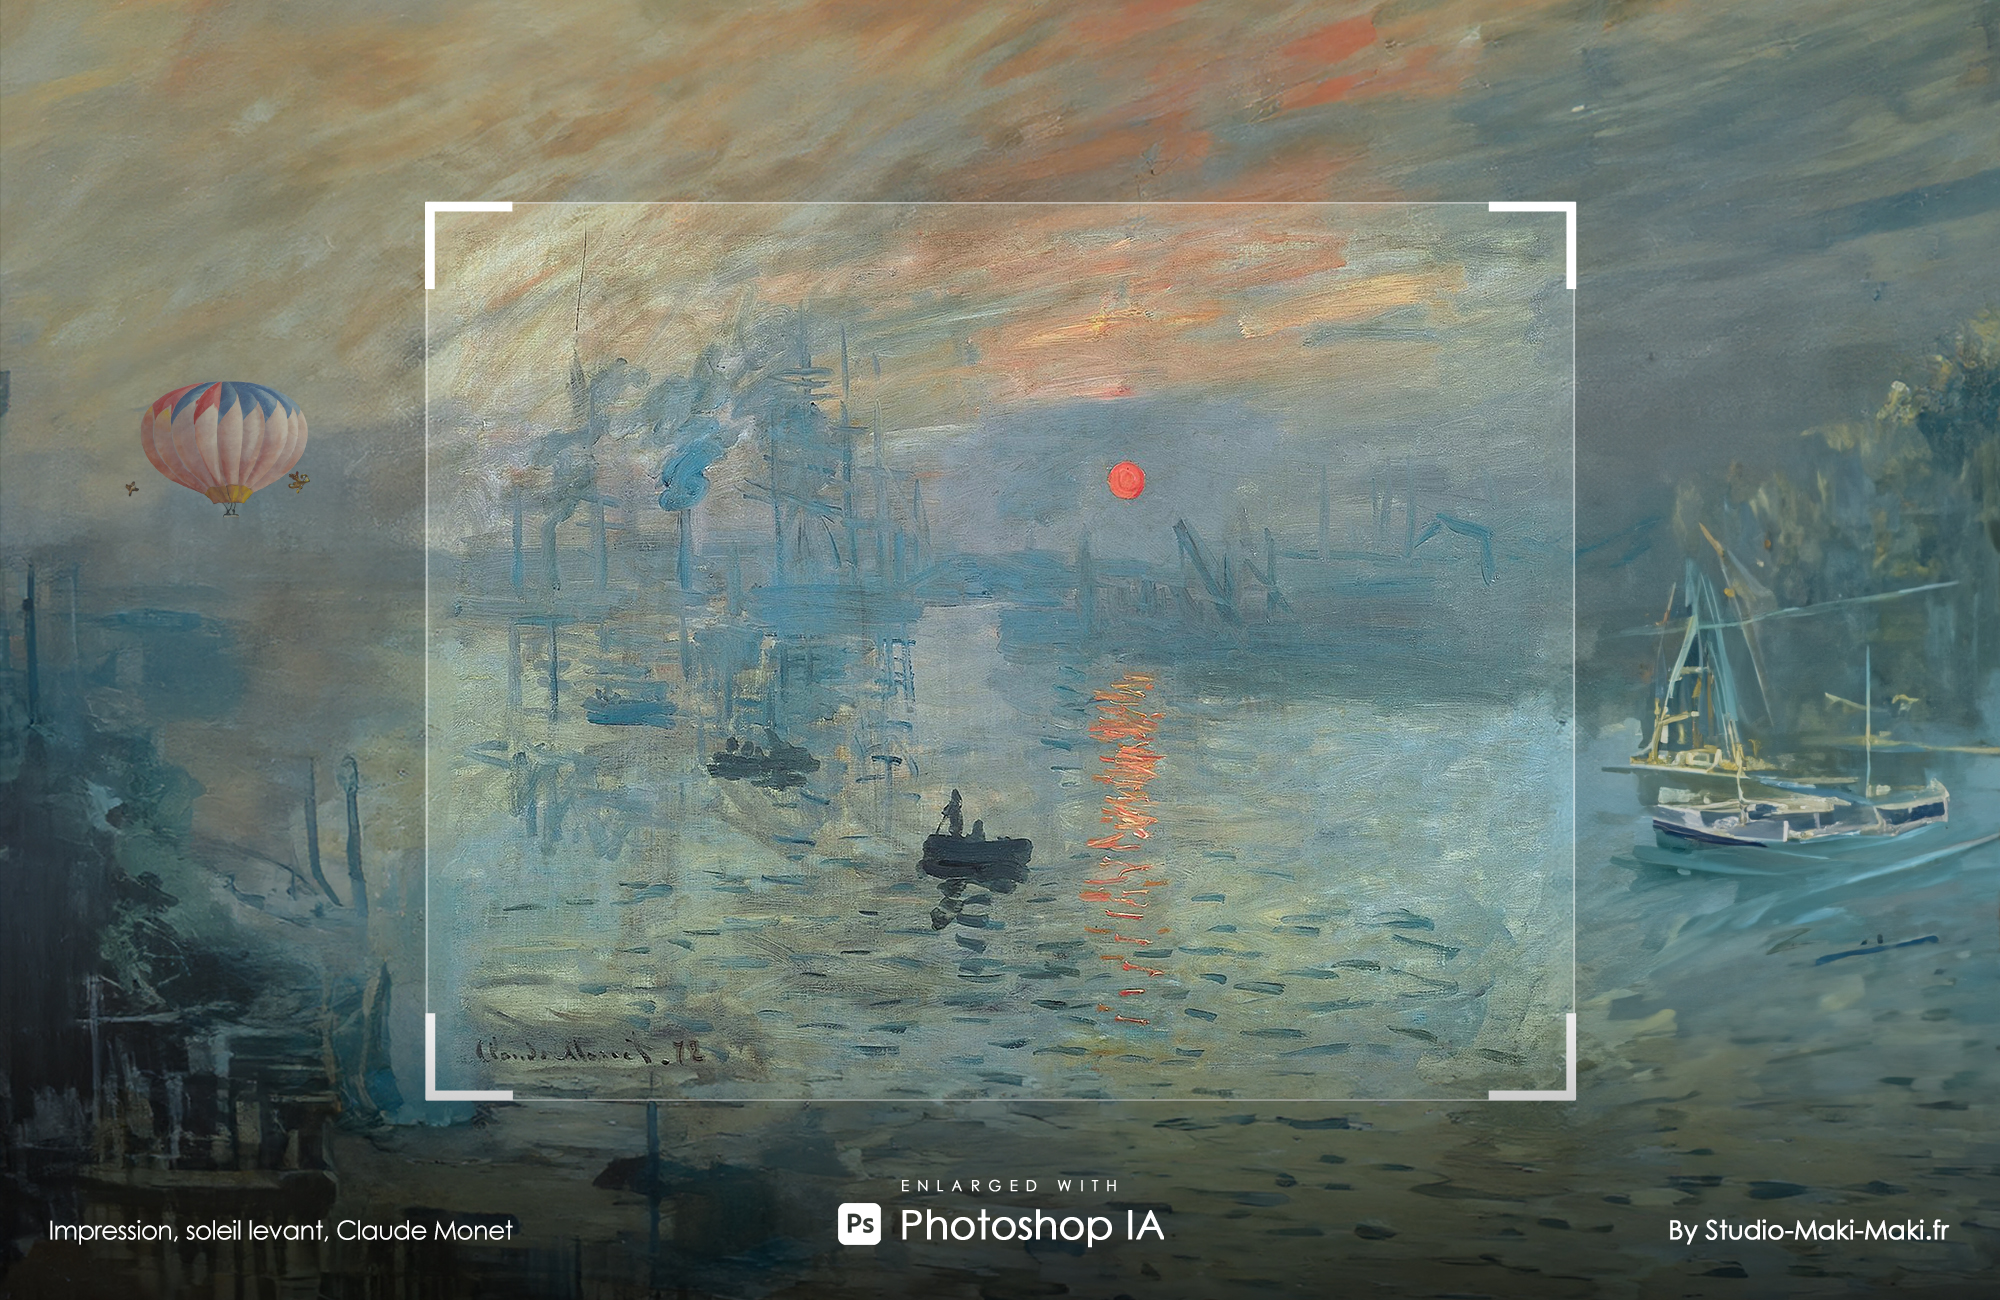 Impression, soleil levant, Claude Monet - Enlarged with Photoshop IA - By Studio Maki Maki